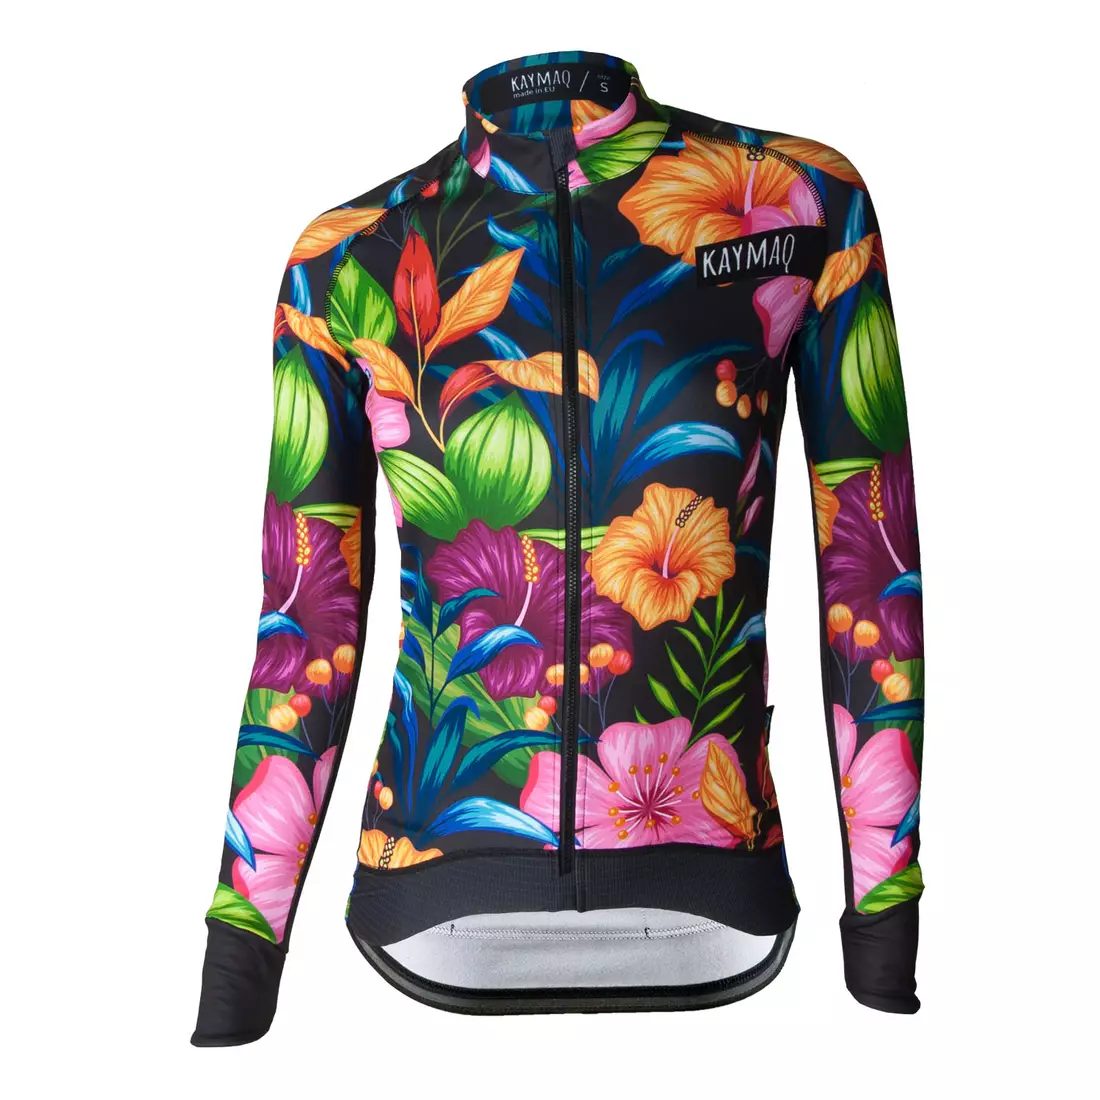 KAYMAQ DESIGN W14 women's cycling jersey 